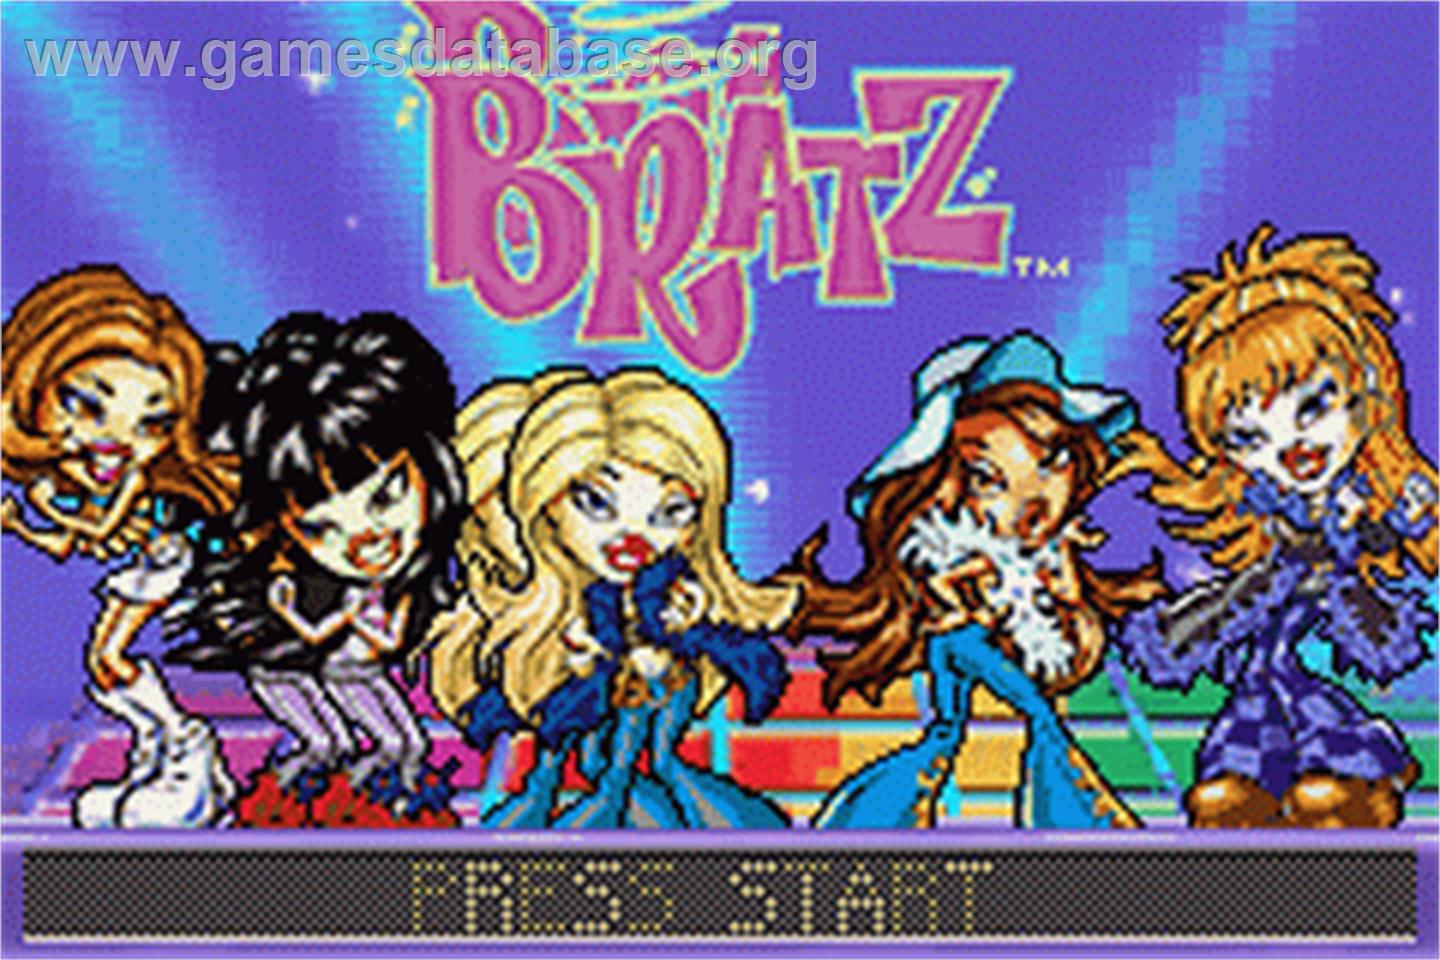 Bratz - Nintendo Game Boy Advance - Artwork - Title Screen